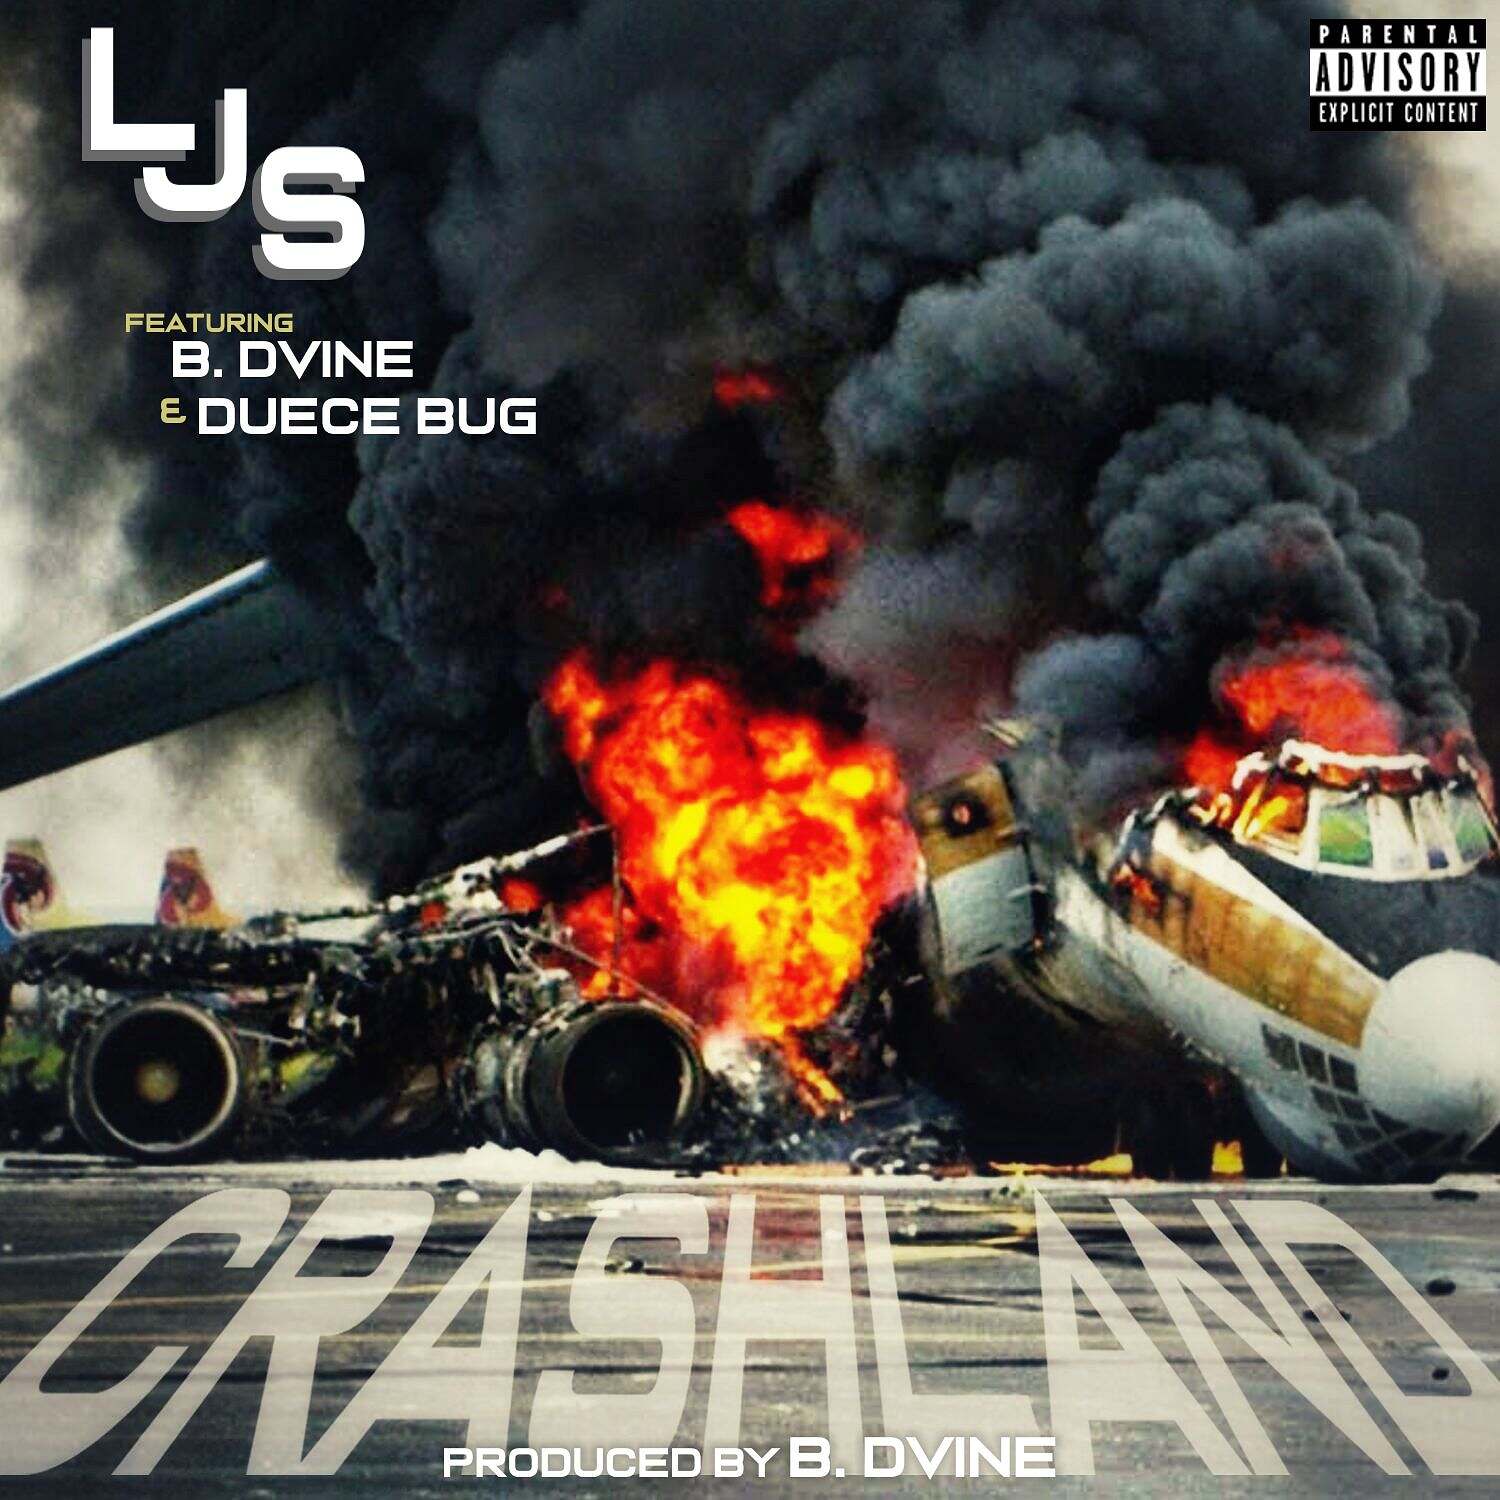 LJS feat. B. Dvine & Duece Bug "Crashland" (Audio)